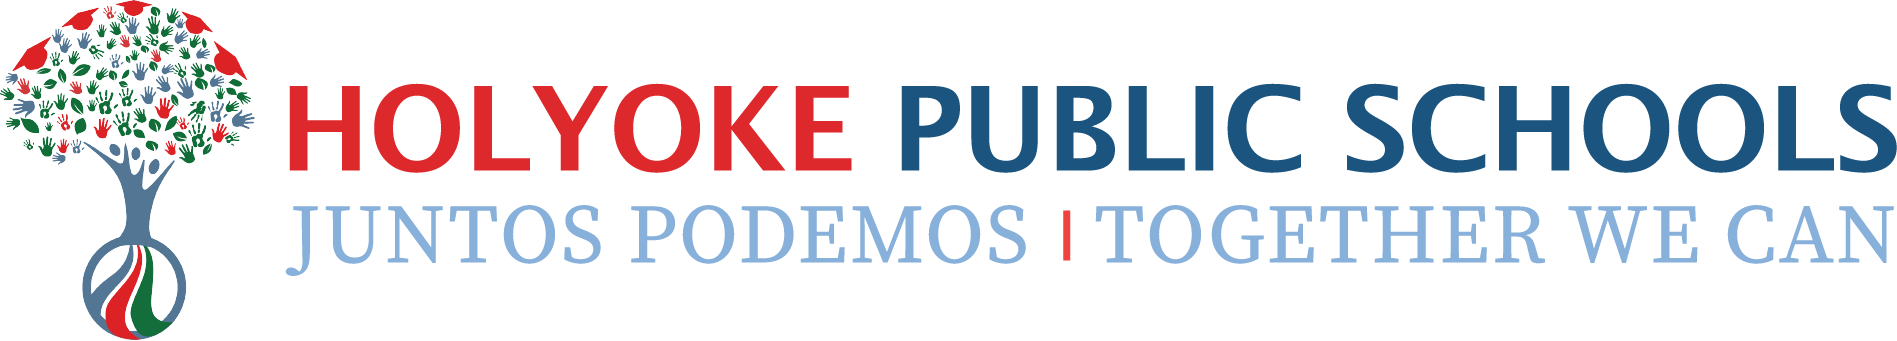 Holyoke Public Schools logo